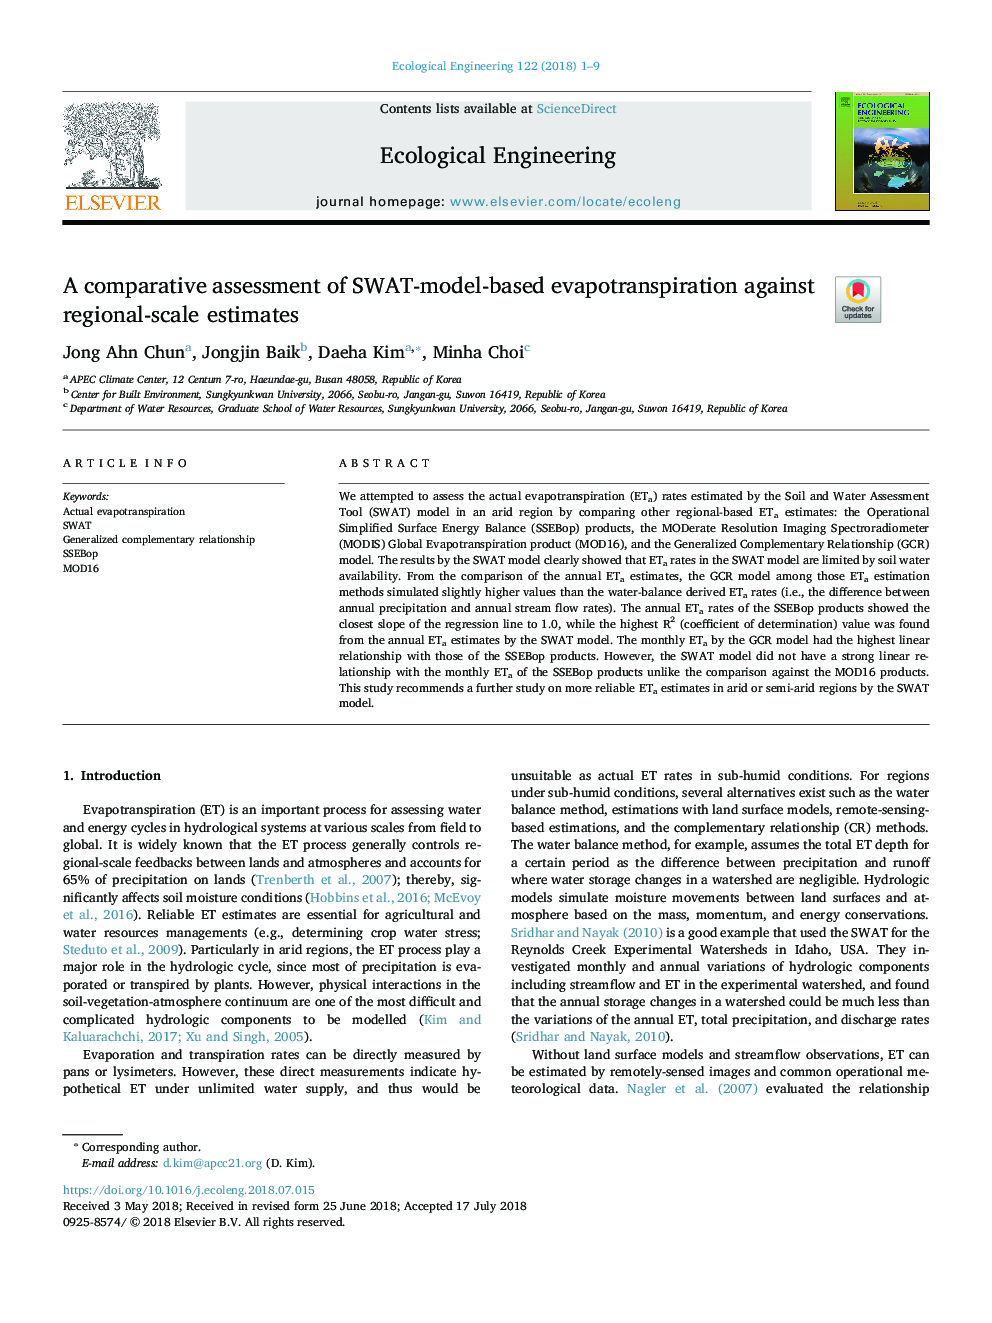 A comparative assessment of SWAT-model-based evapotranspiration against regional-scale estimates